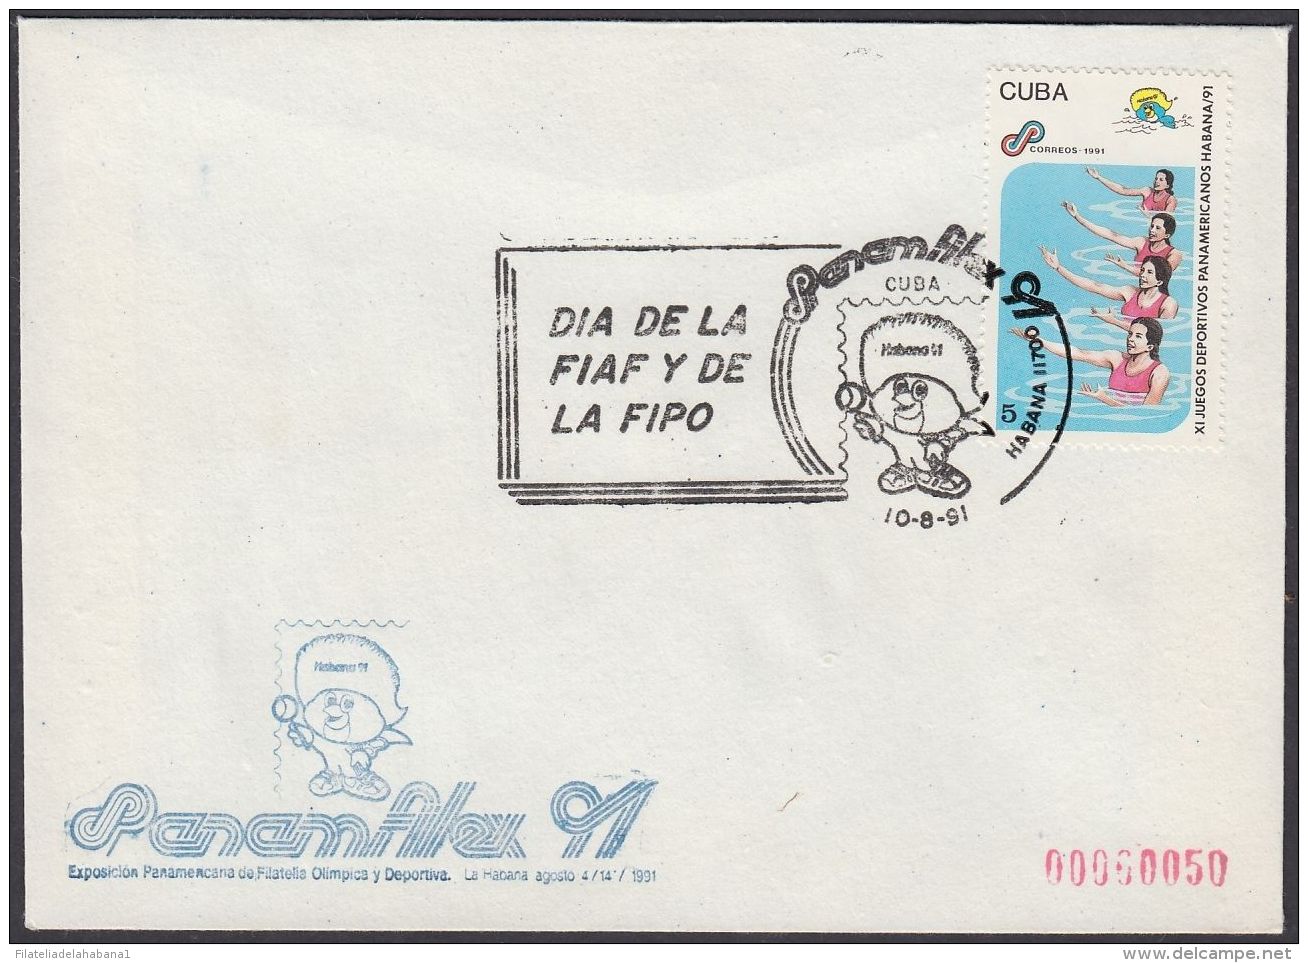 1991-CE-41 CUBA 1991 SPECIAL CANCEL. PANAMFILEX EXPO. DIA DE LA FIAF Y LA FIPO. - Lettres & Documents